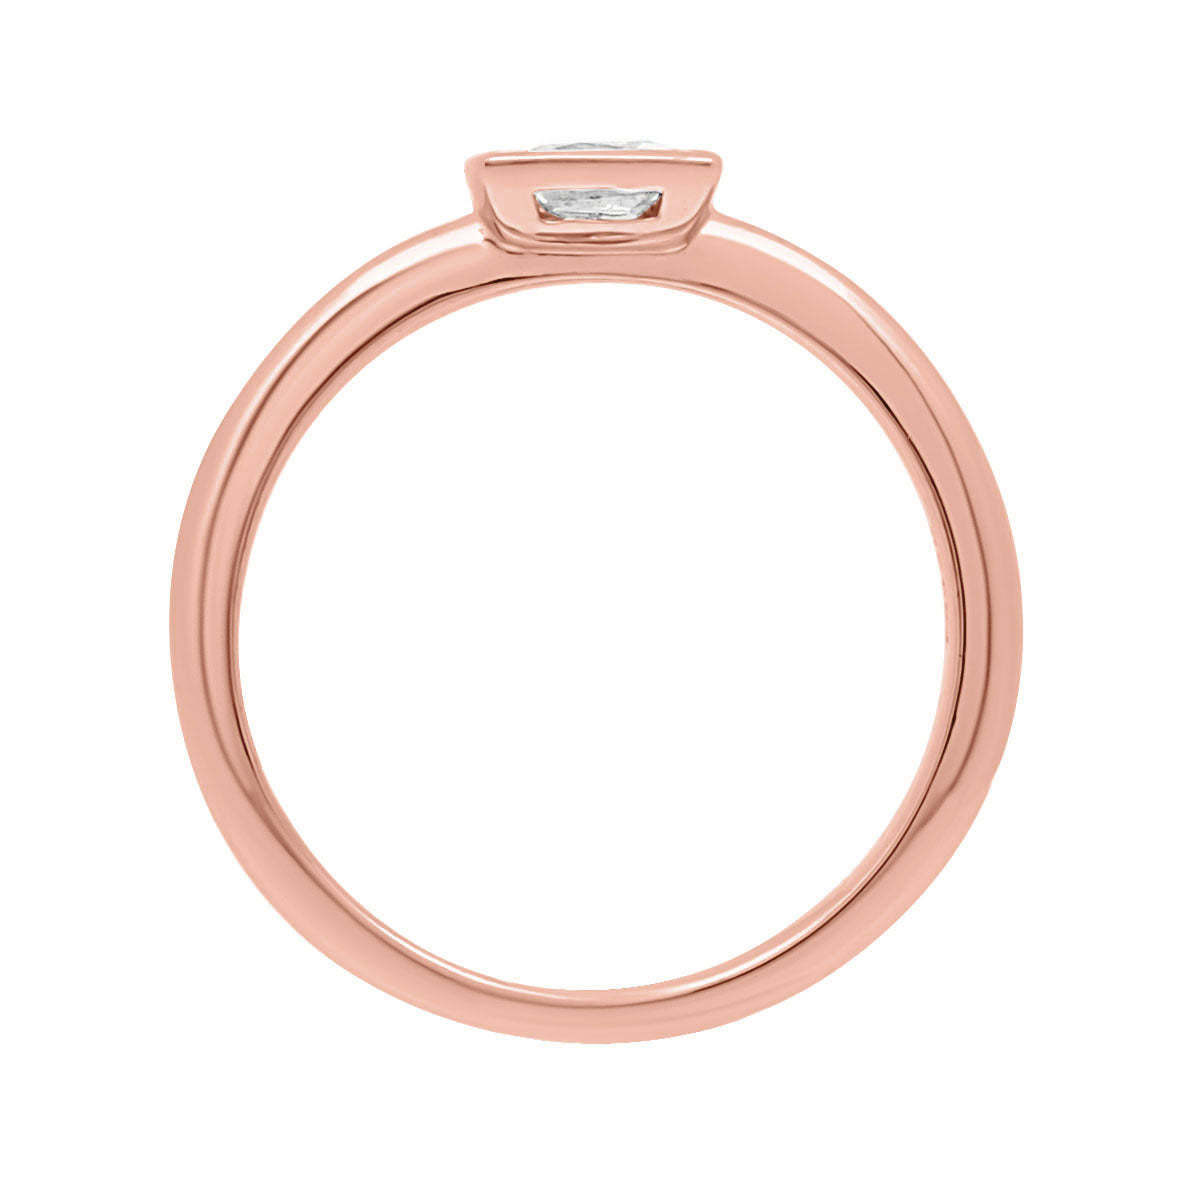 Bezel Set Princess Cut Engagement Ring In Rose Gold stending upright